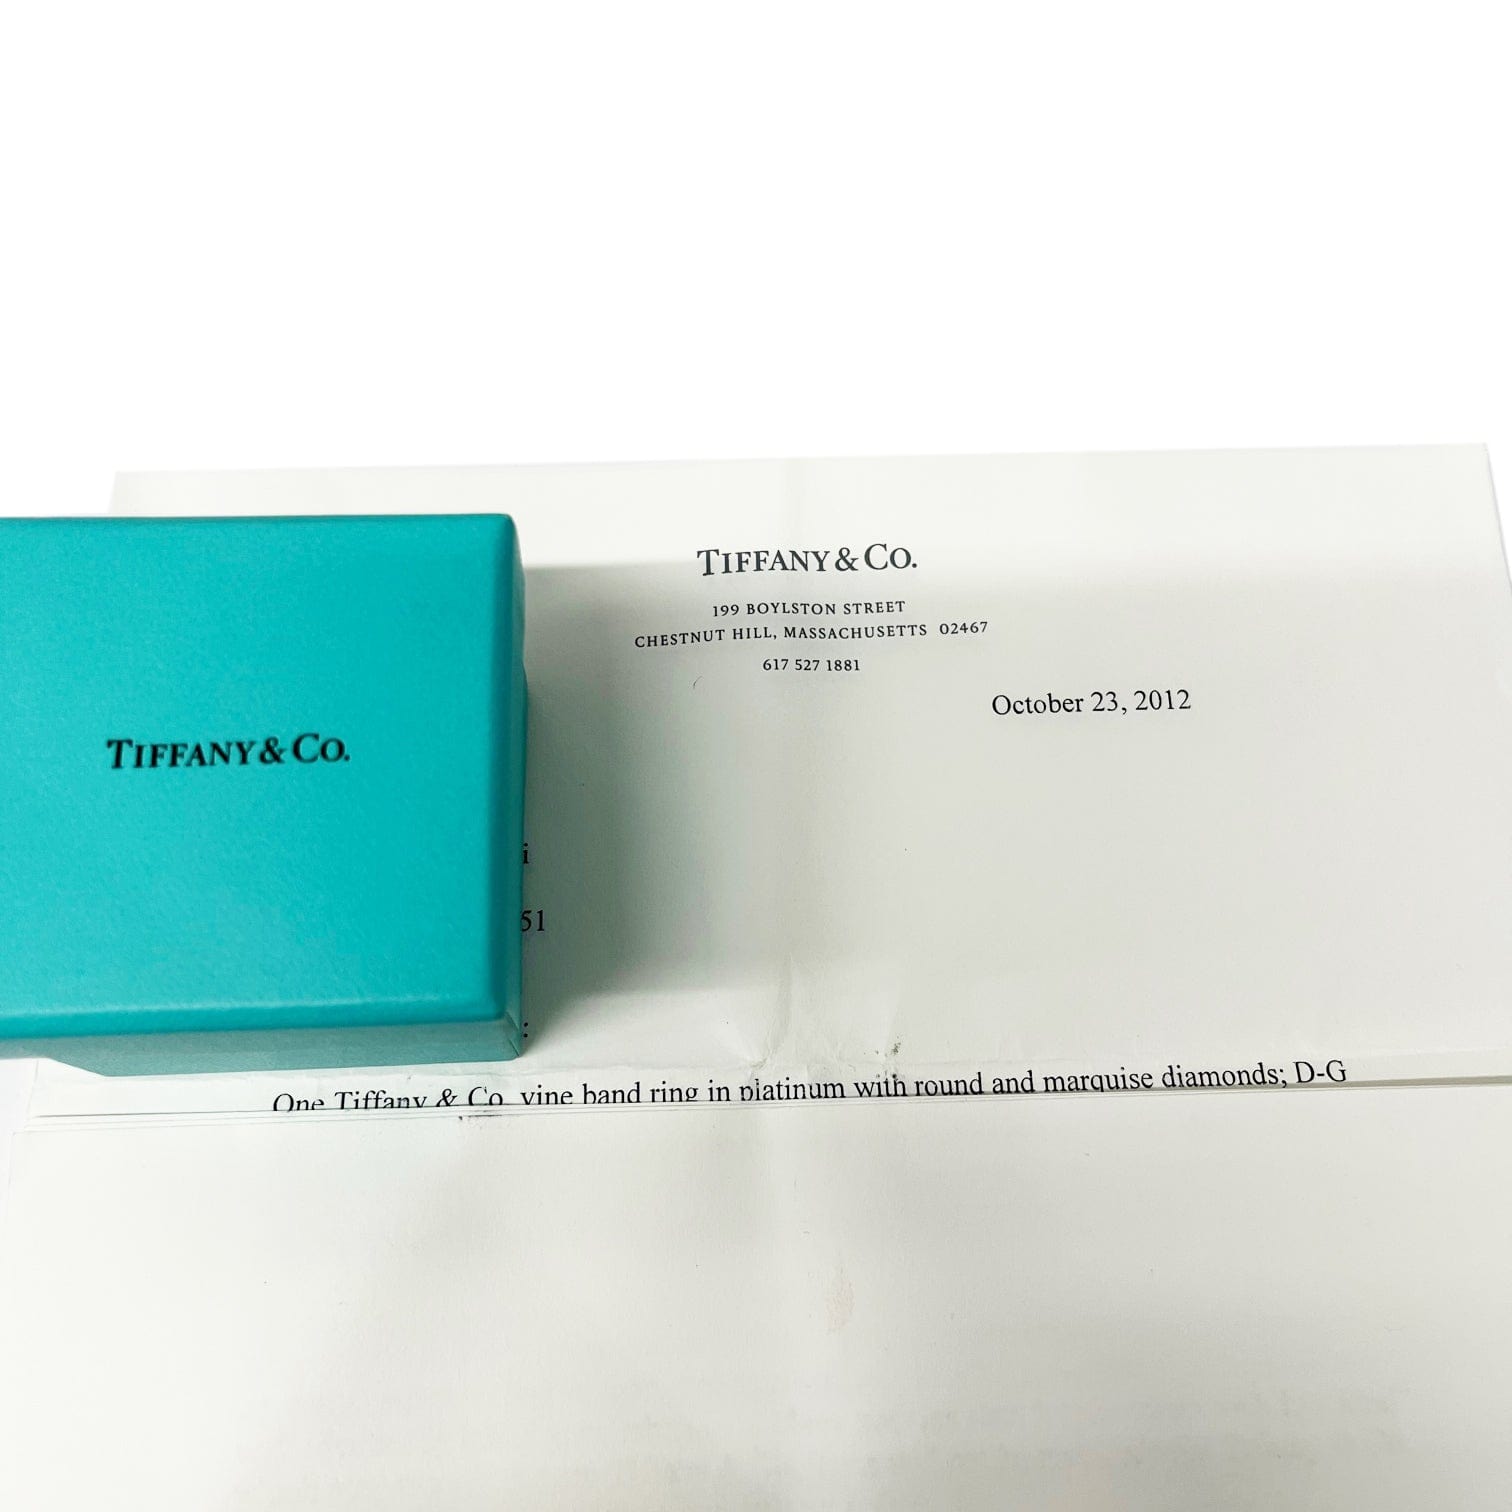 Tiffany & Co. Tiffany & Co. Vine 8.8 mm Wide Diamond Band in Platinum 1.25 CTW